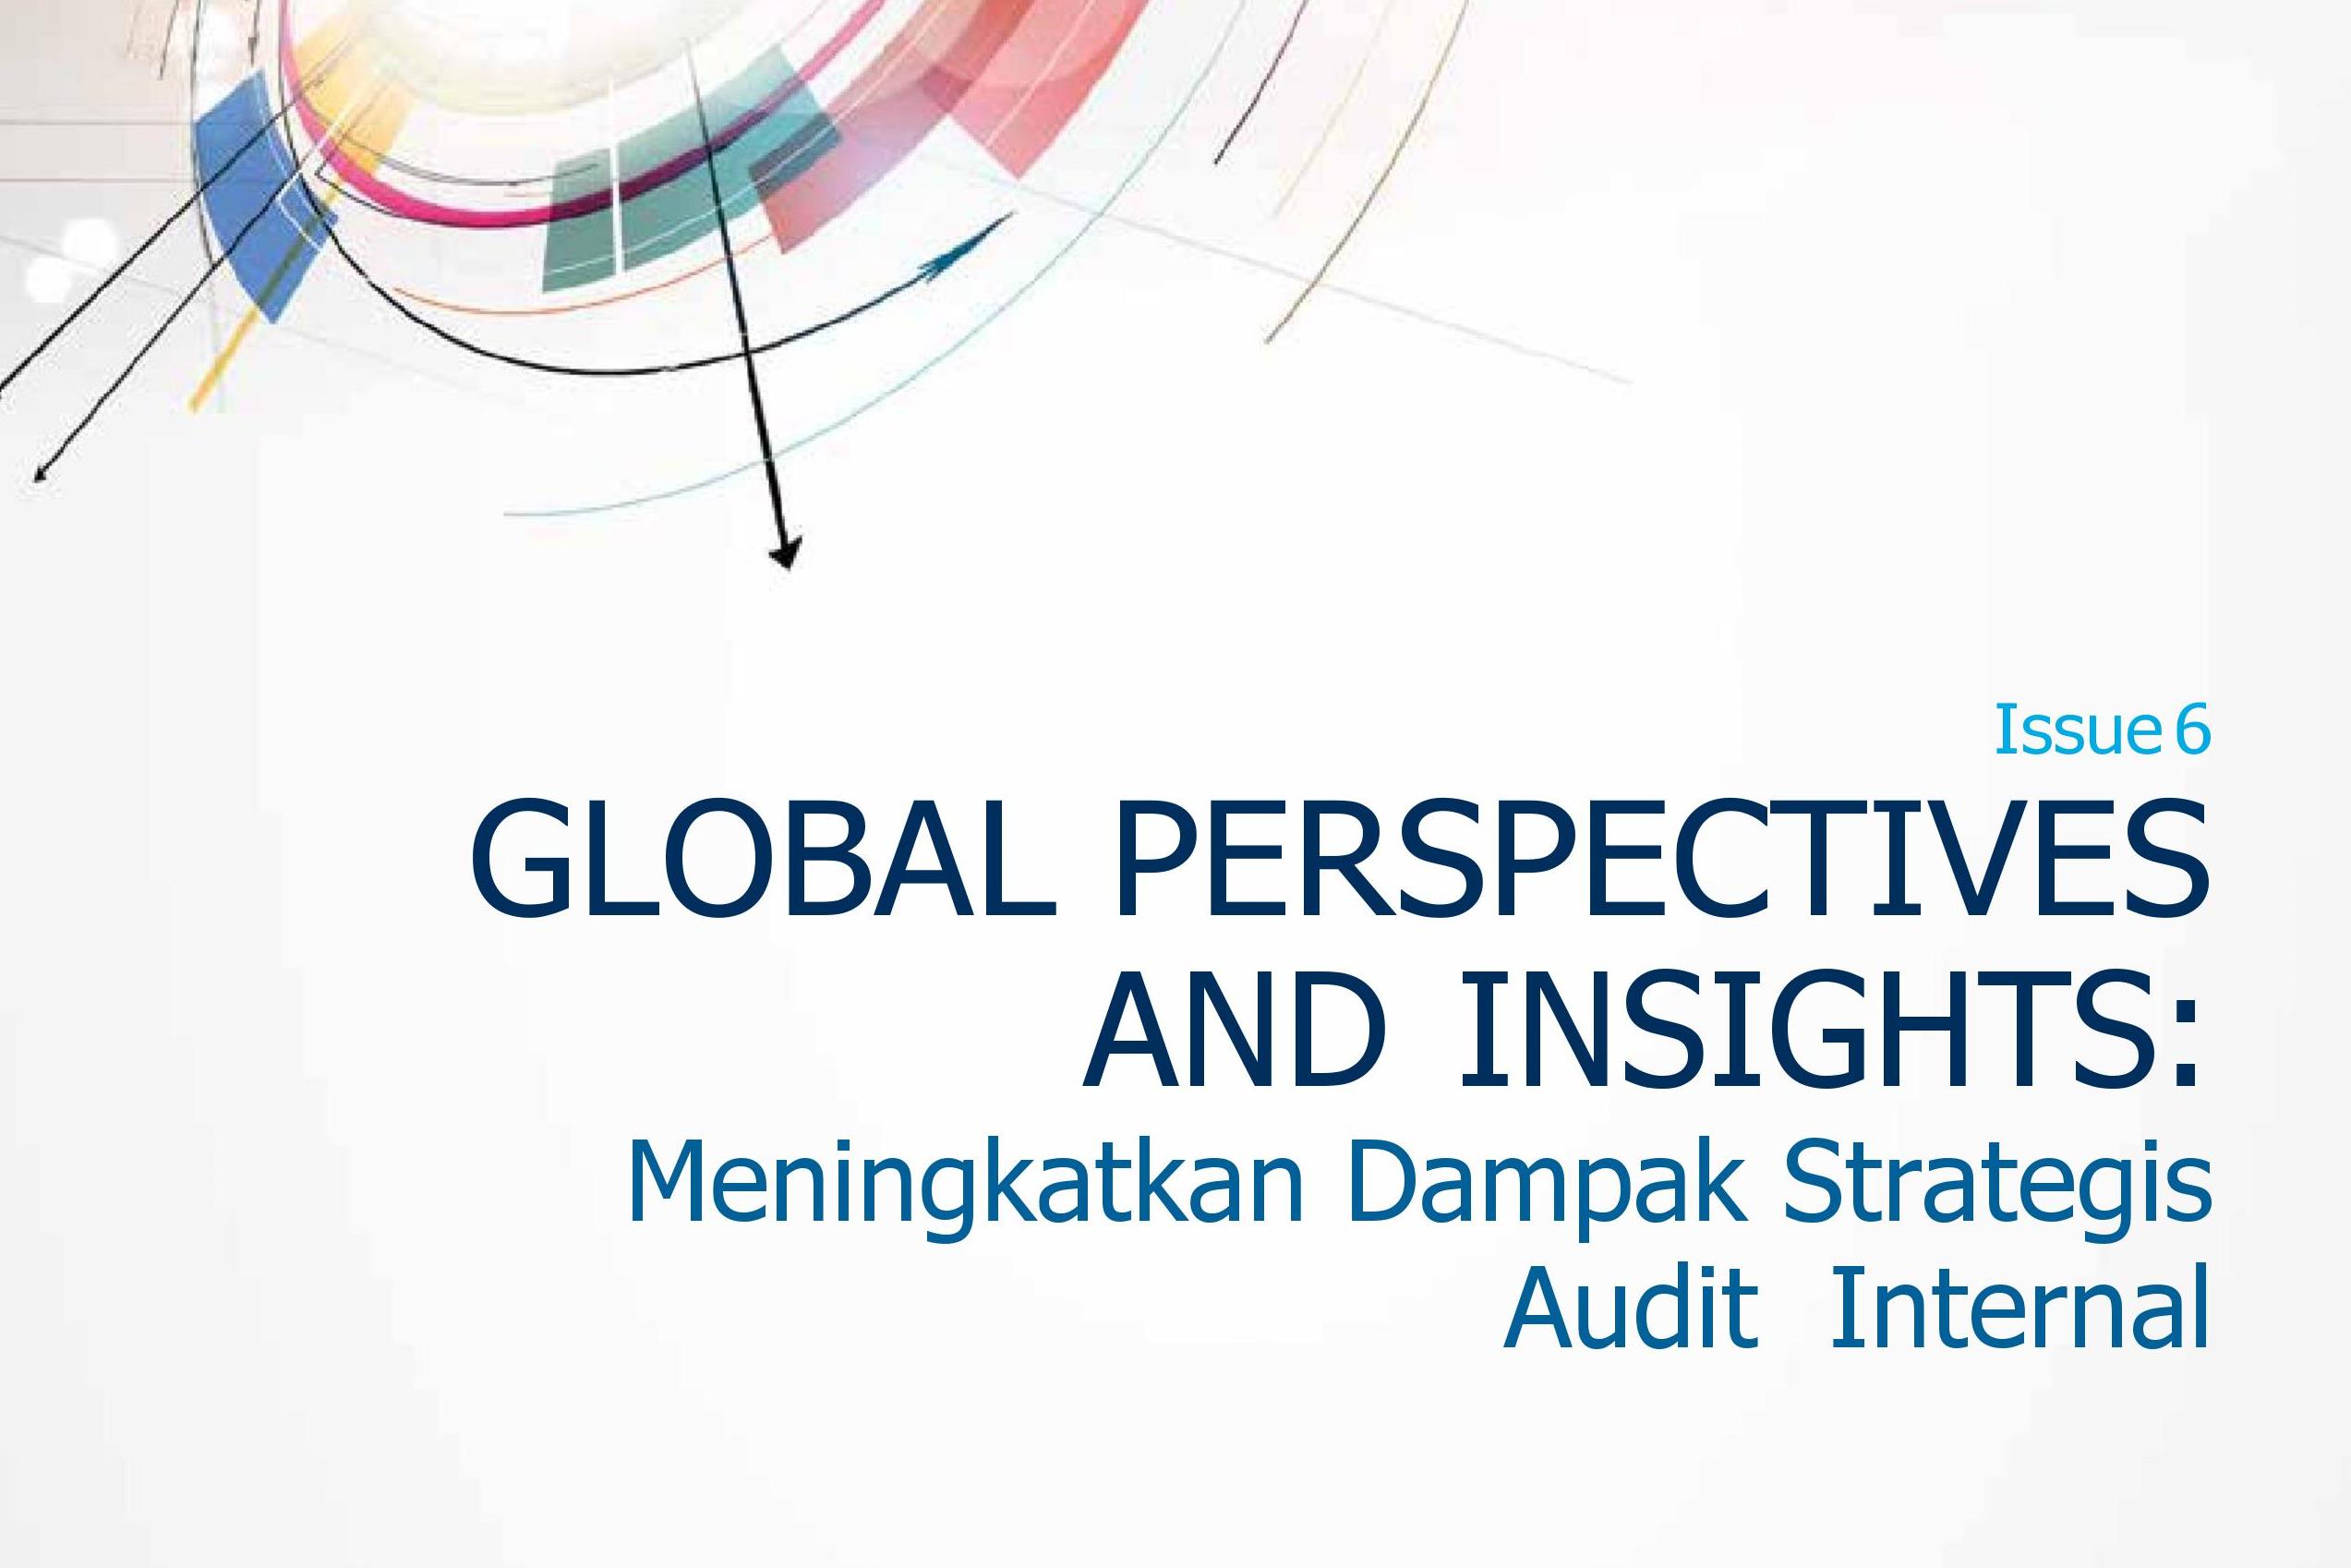 GLOBAL PERSPECTIVES AND INSIGHTS: Meningkatkan Dampak Strategis Audit Internal